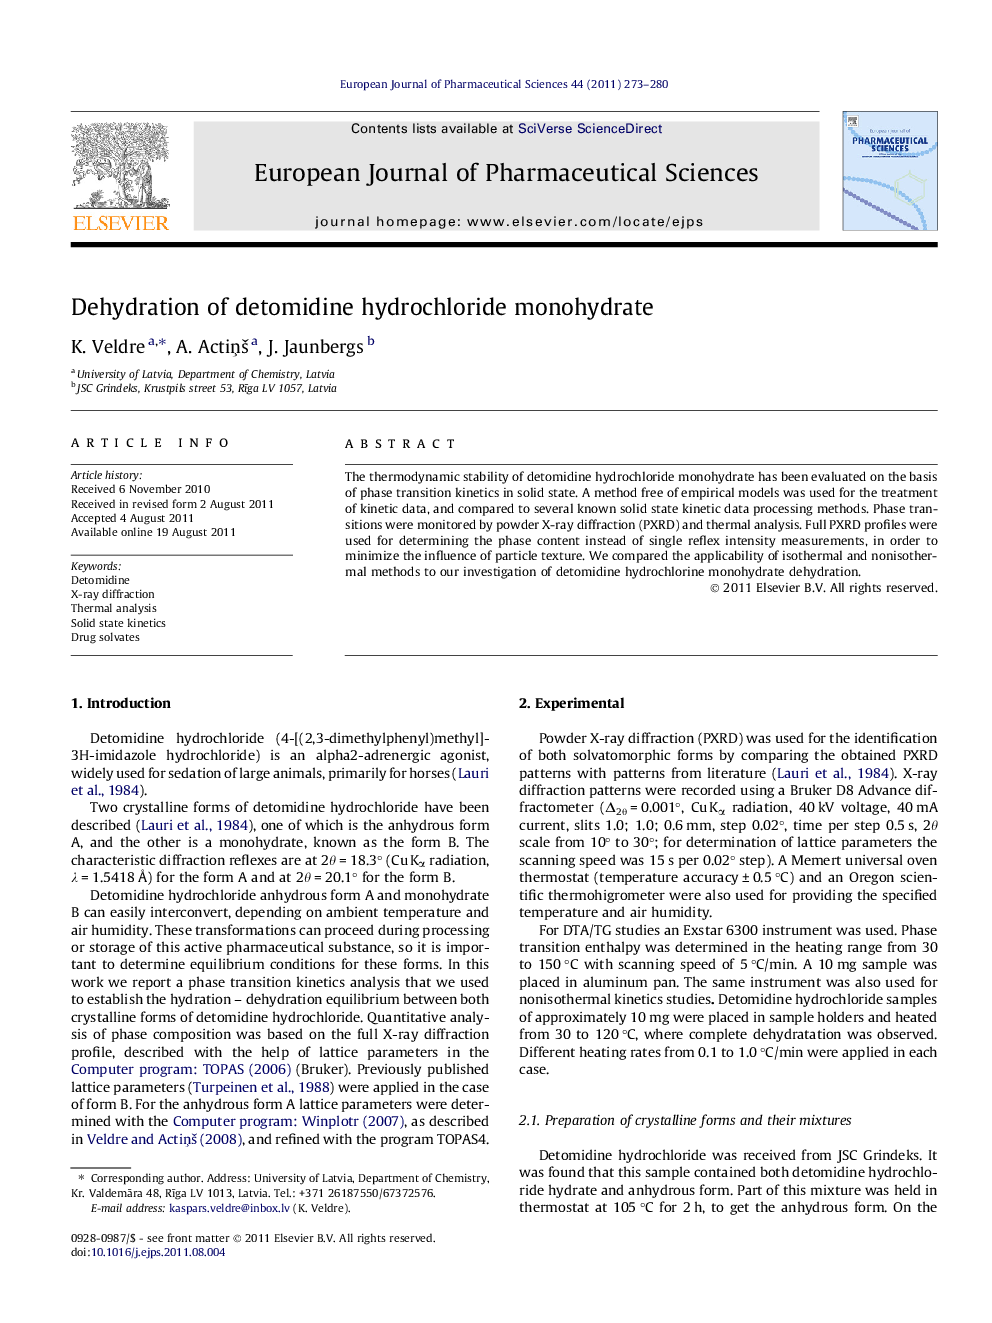 Dehydration of detomidine hydrochloride monohydrate